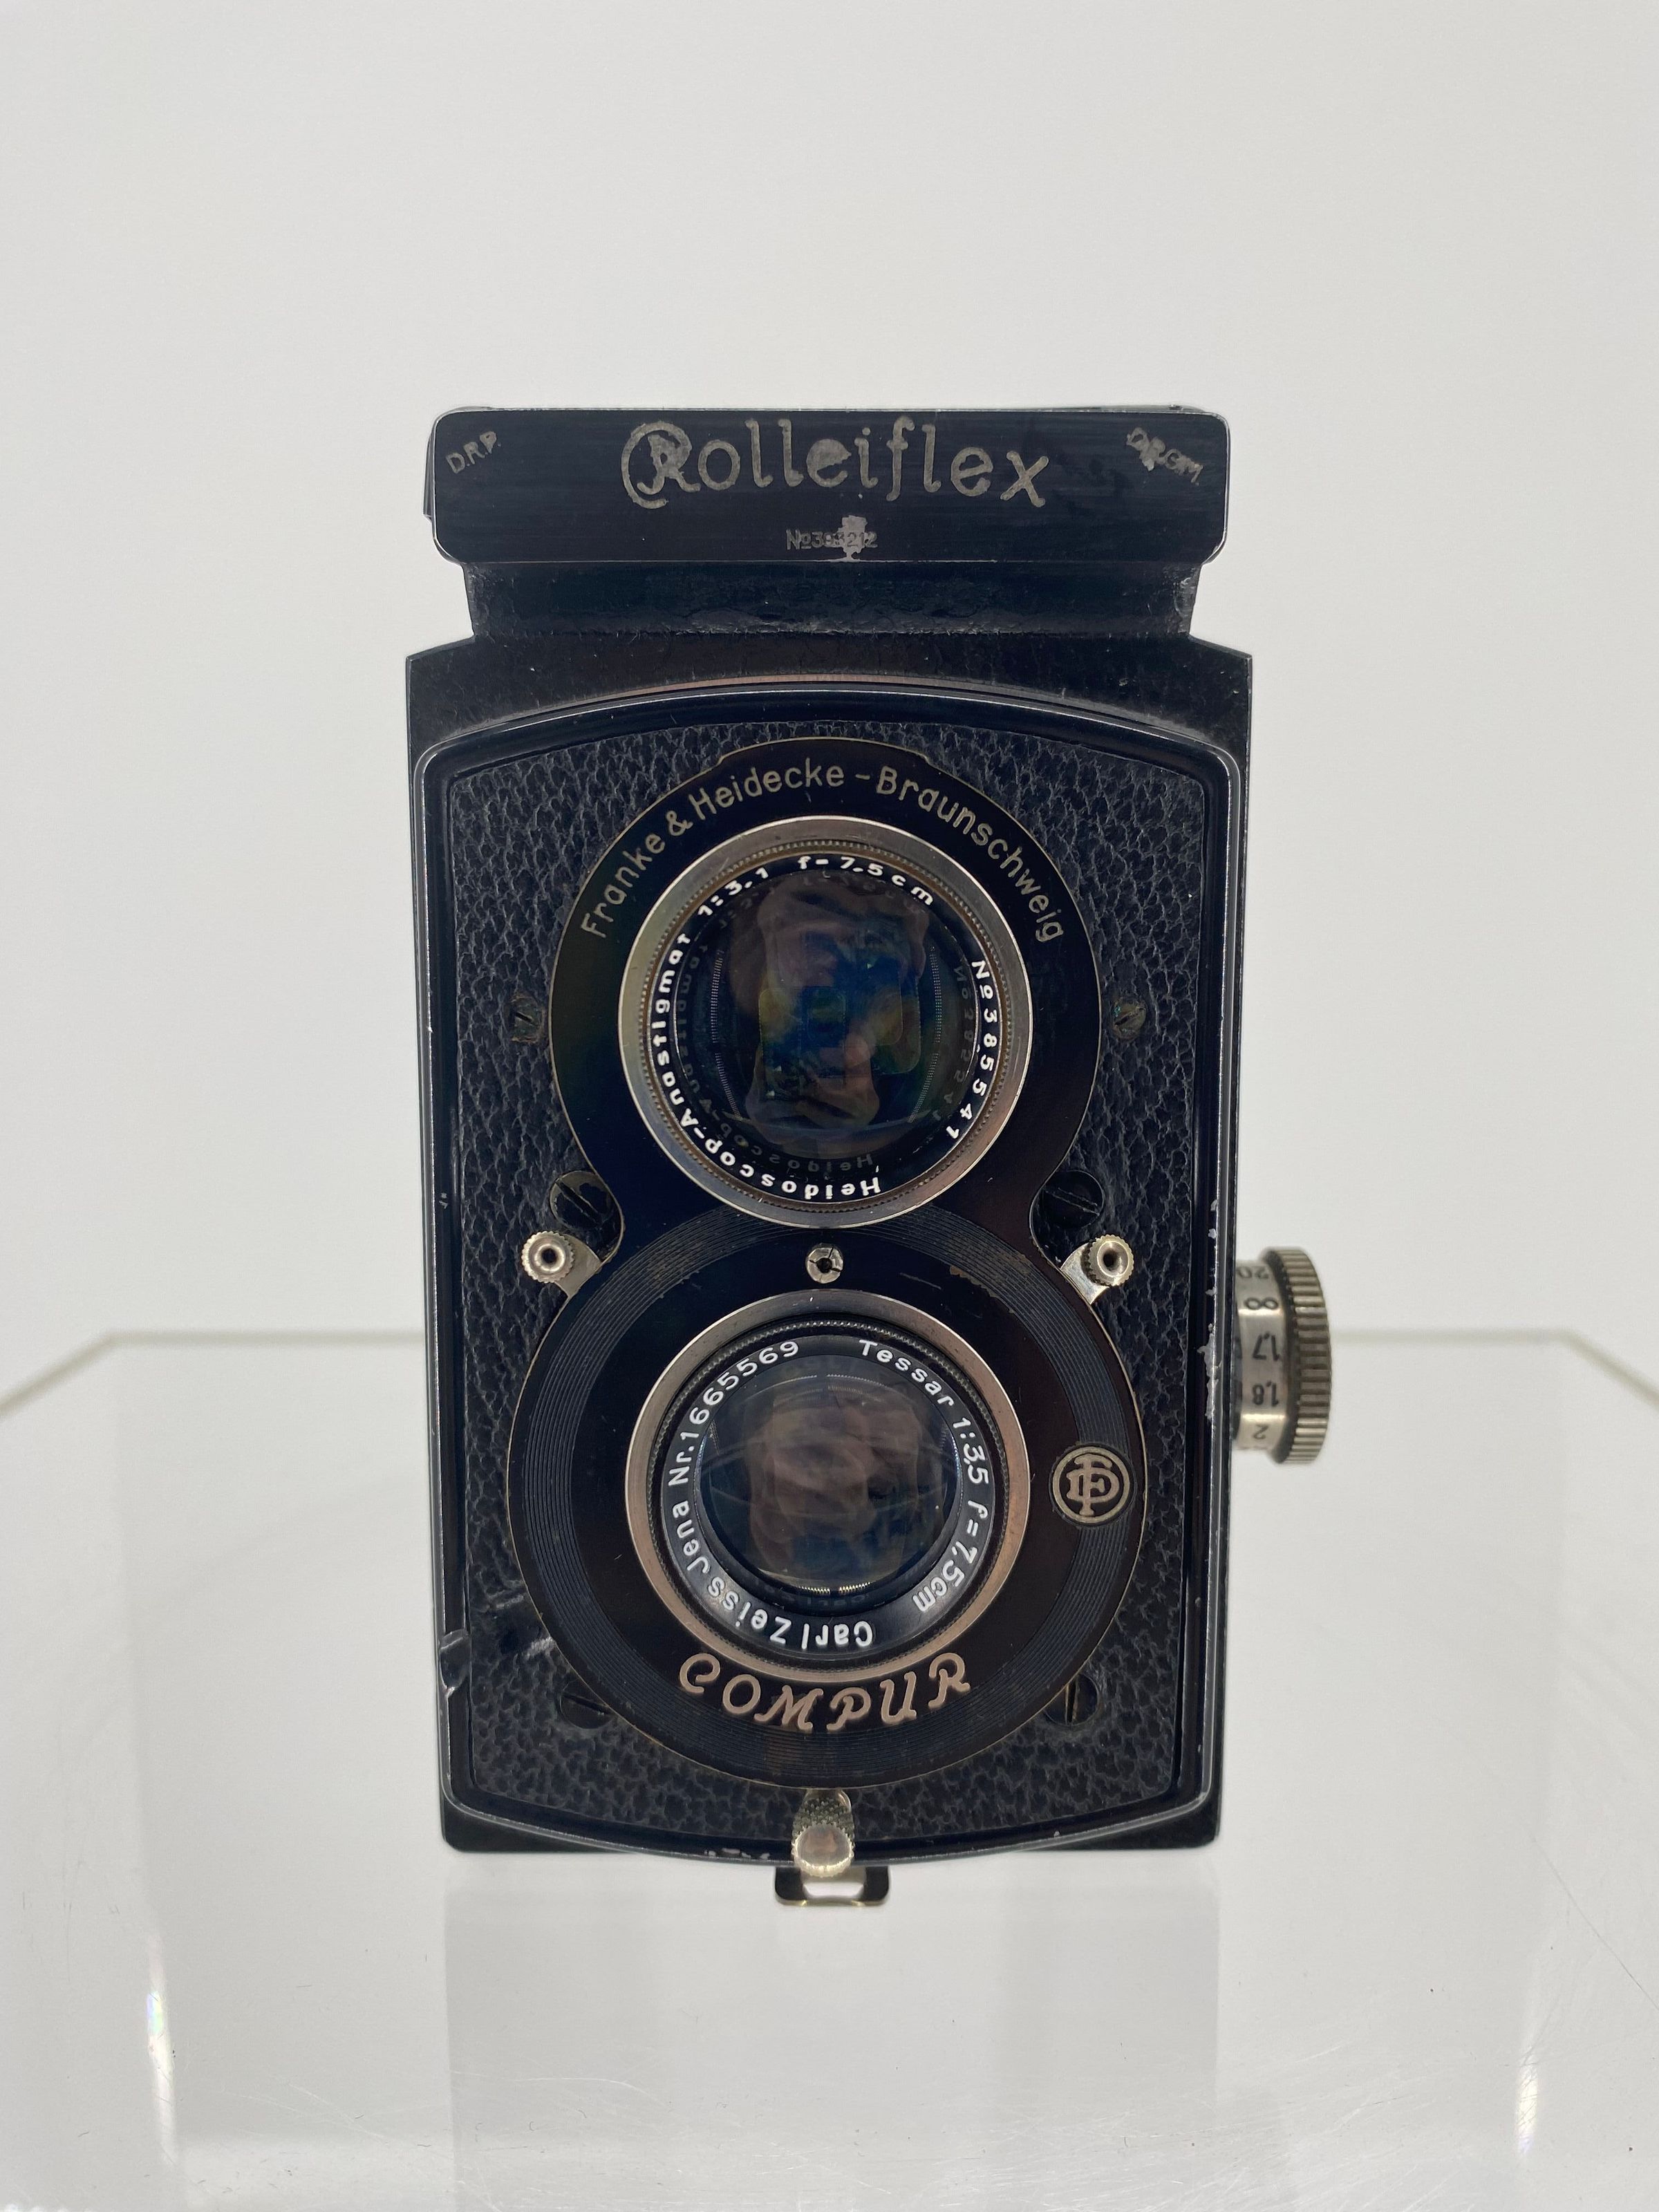 Primary Image of Rolleiflex Camera